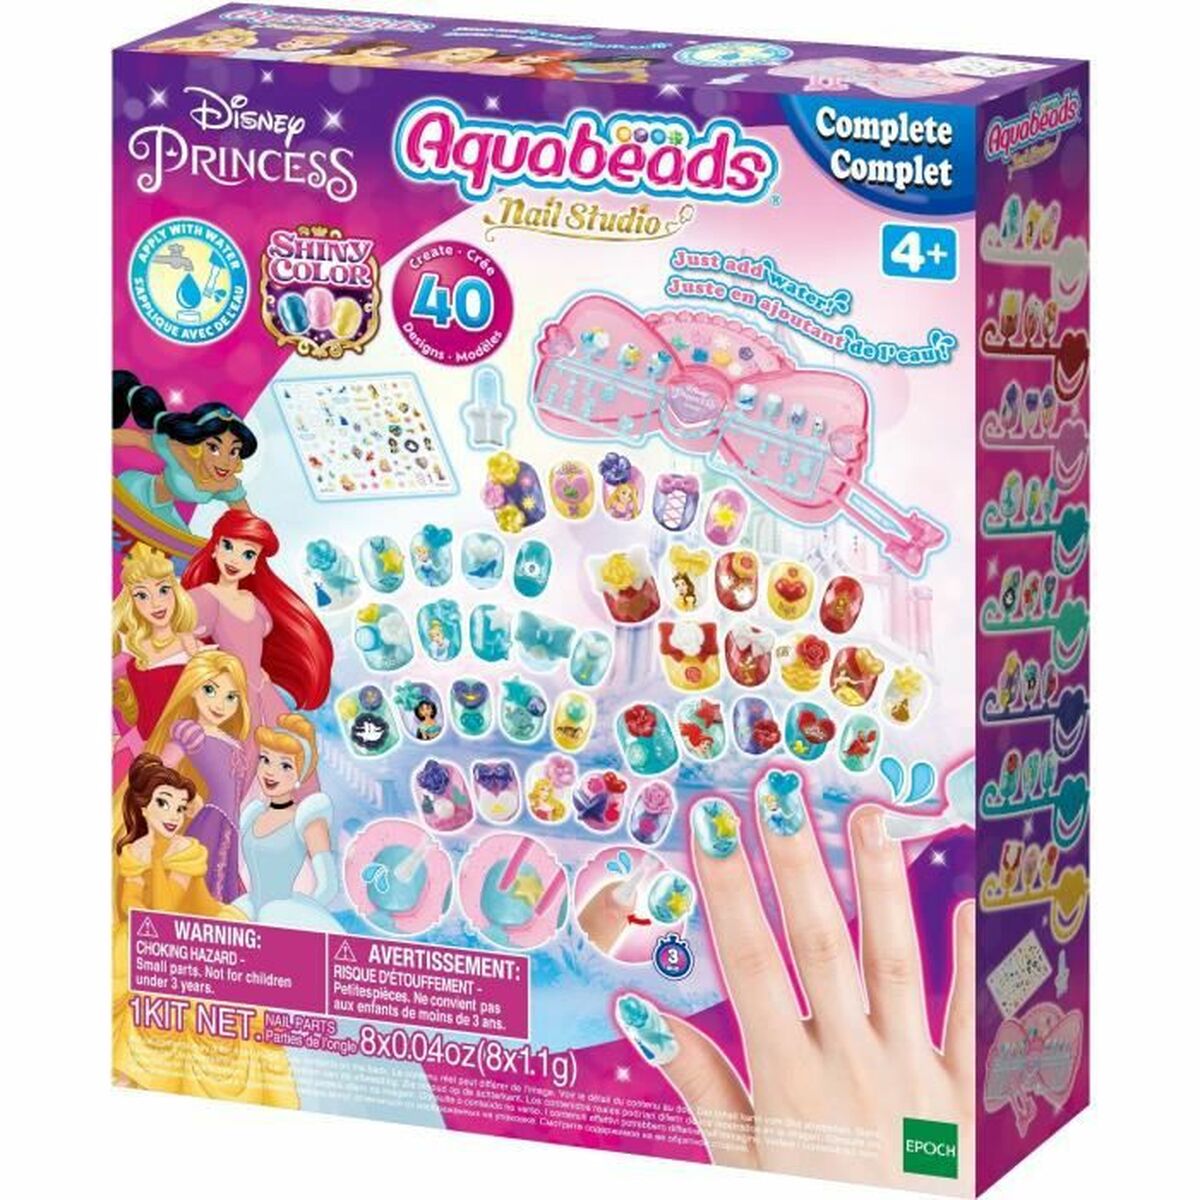 Manicureset Aquabeads The Disney Princesses Manicure Box